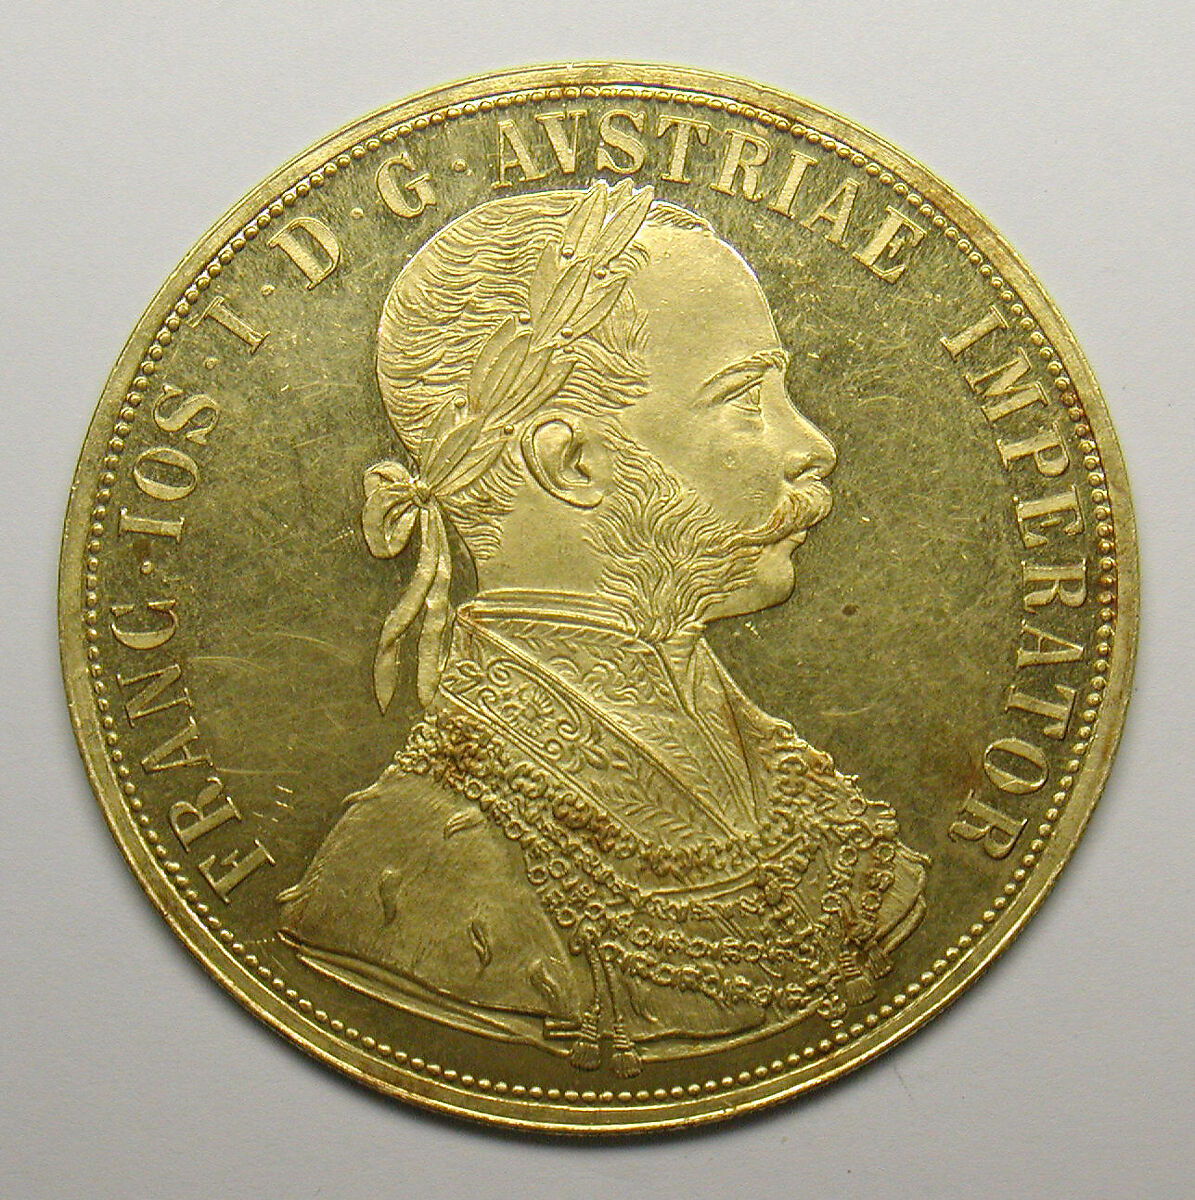 4-ducat piece, Francis Joseph I of Austria, 1888, 40th anniversary of the Emperor's accession, Gold, Austrian 